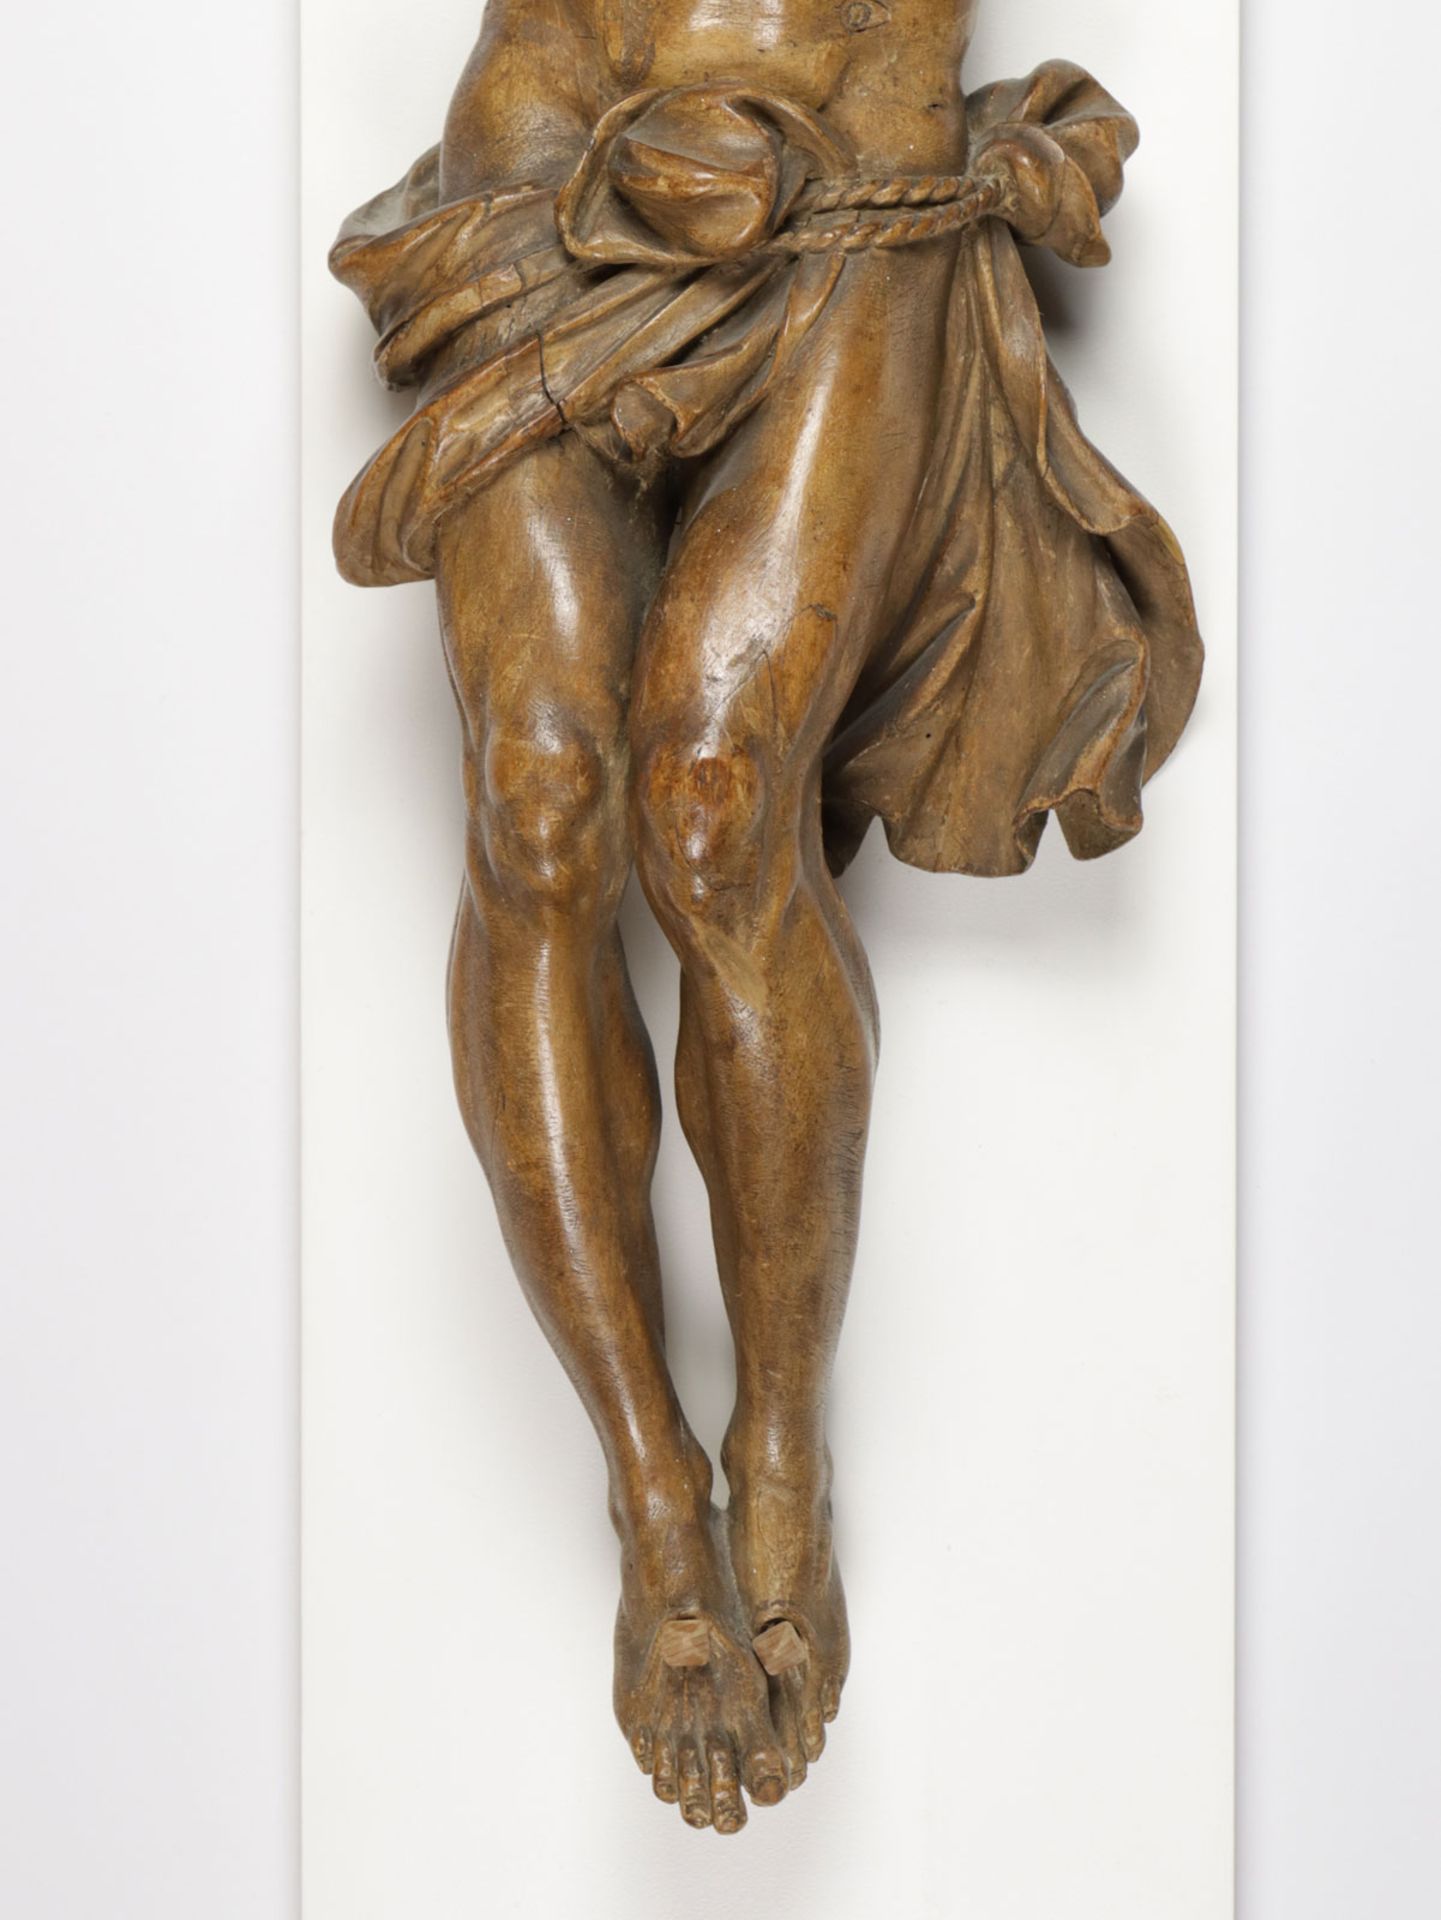 Georg Petel - Kruzifix - Image 4 of 19